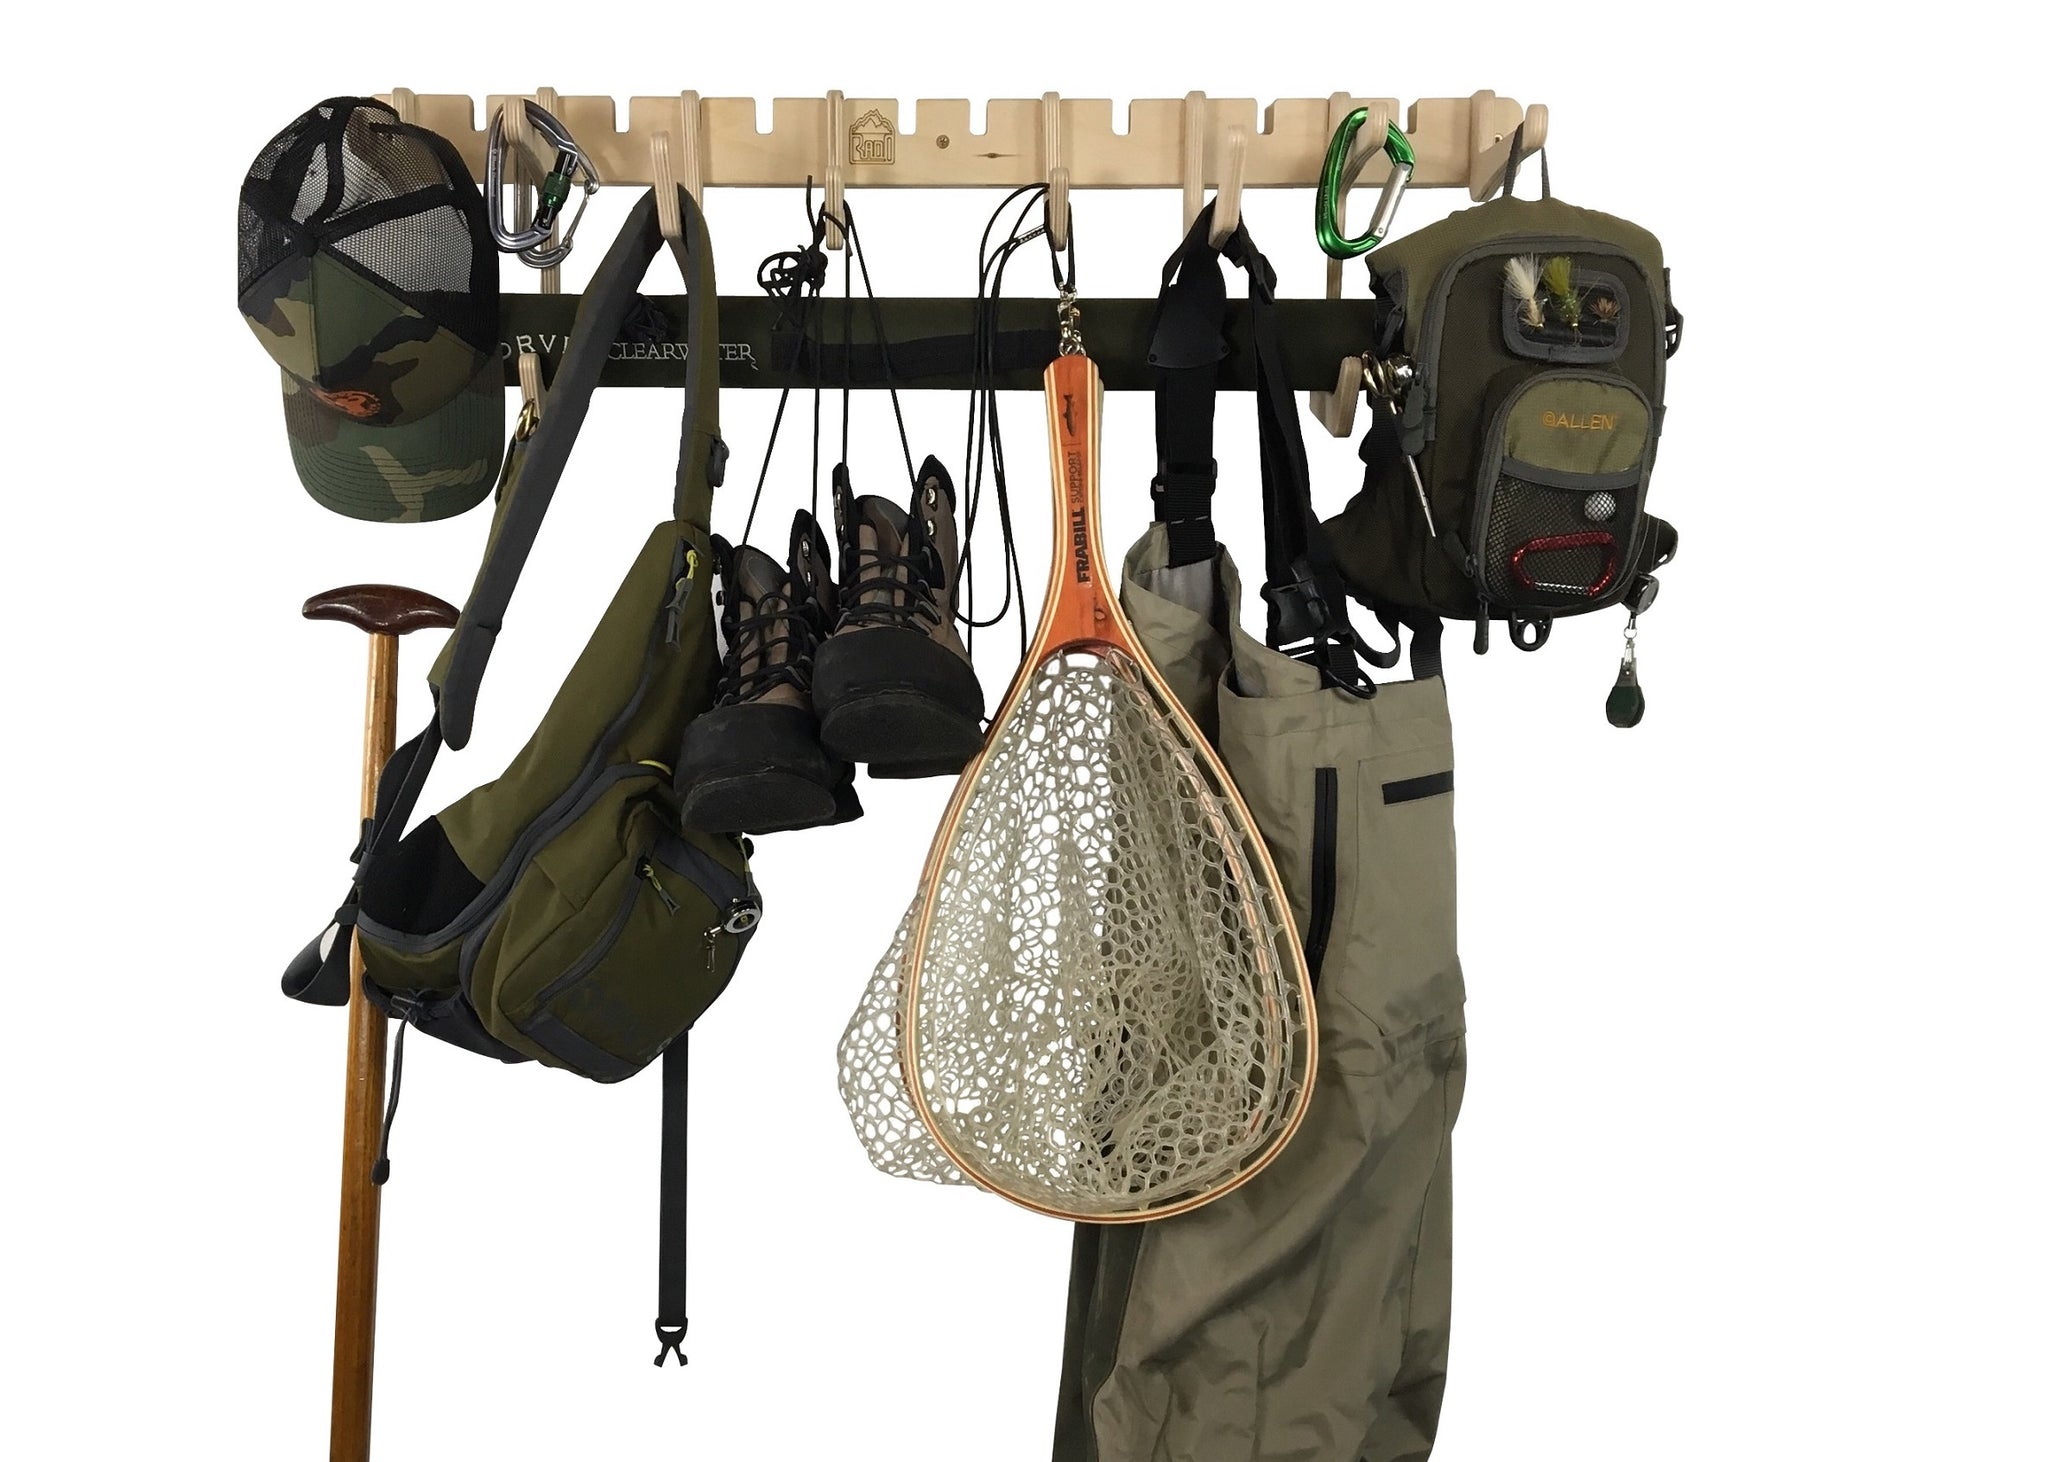 The Jetty Fishing Gear Storage Wall Rack